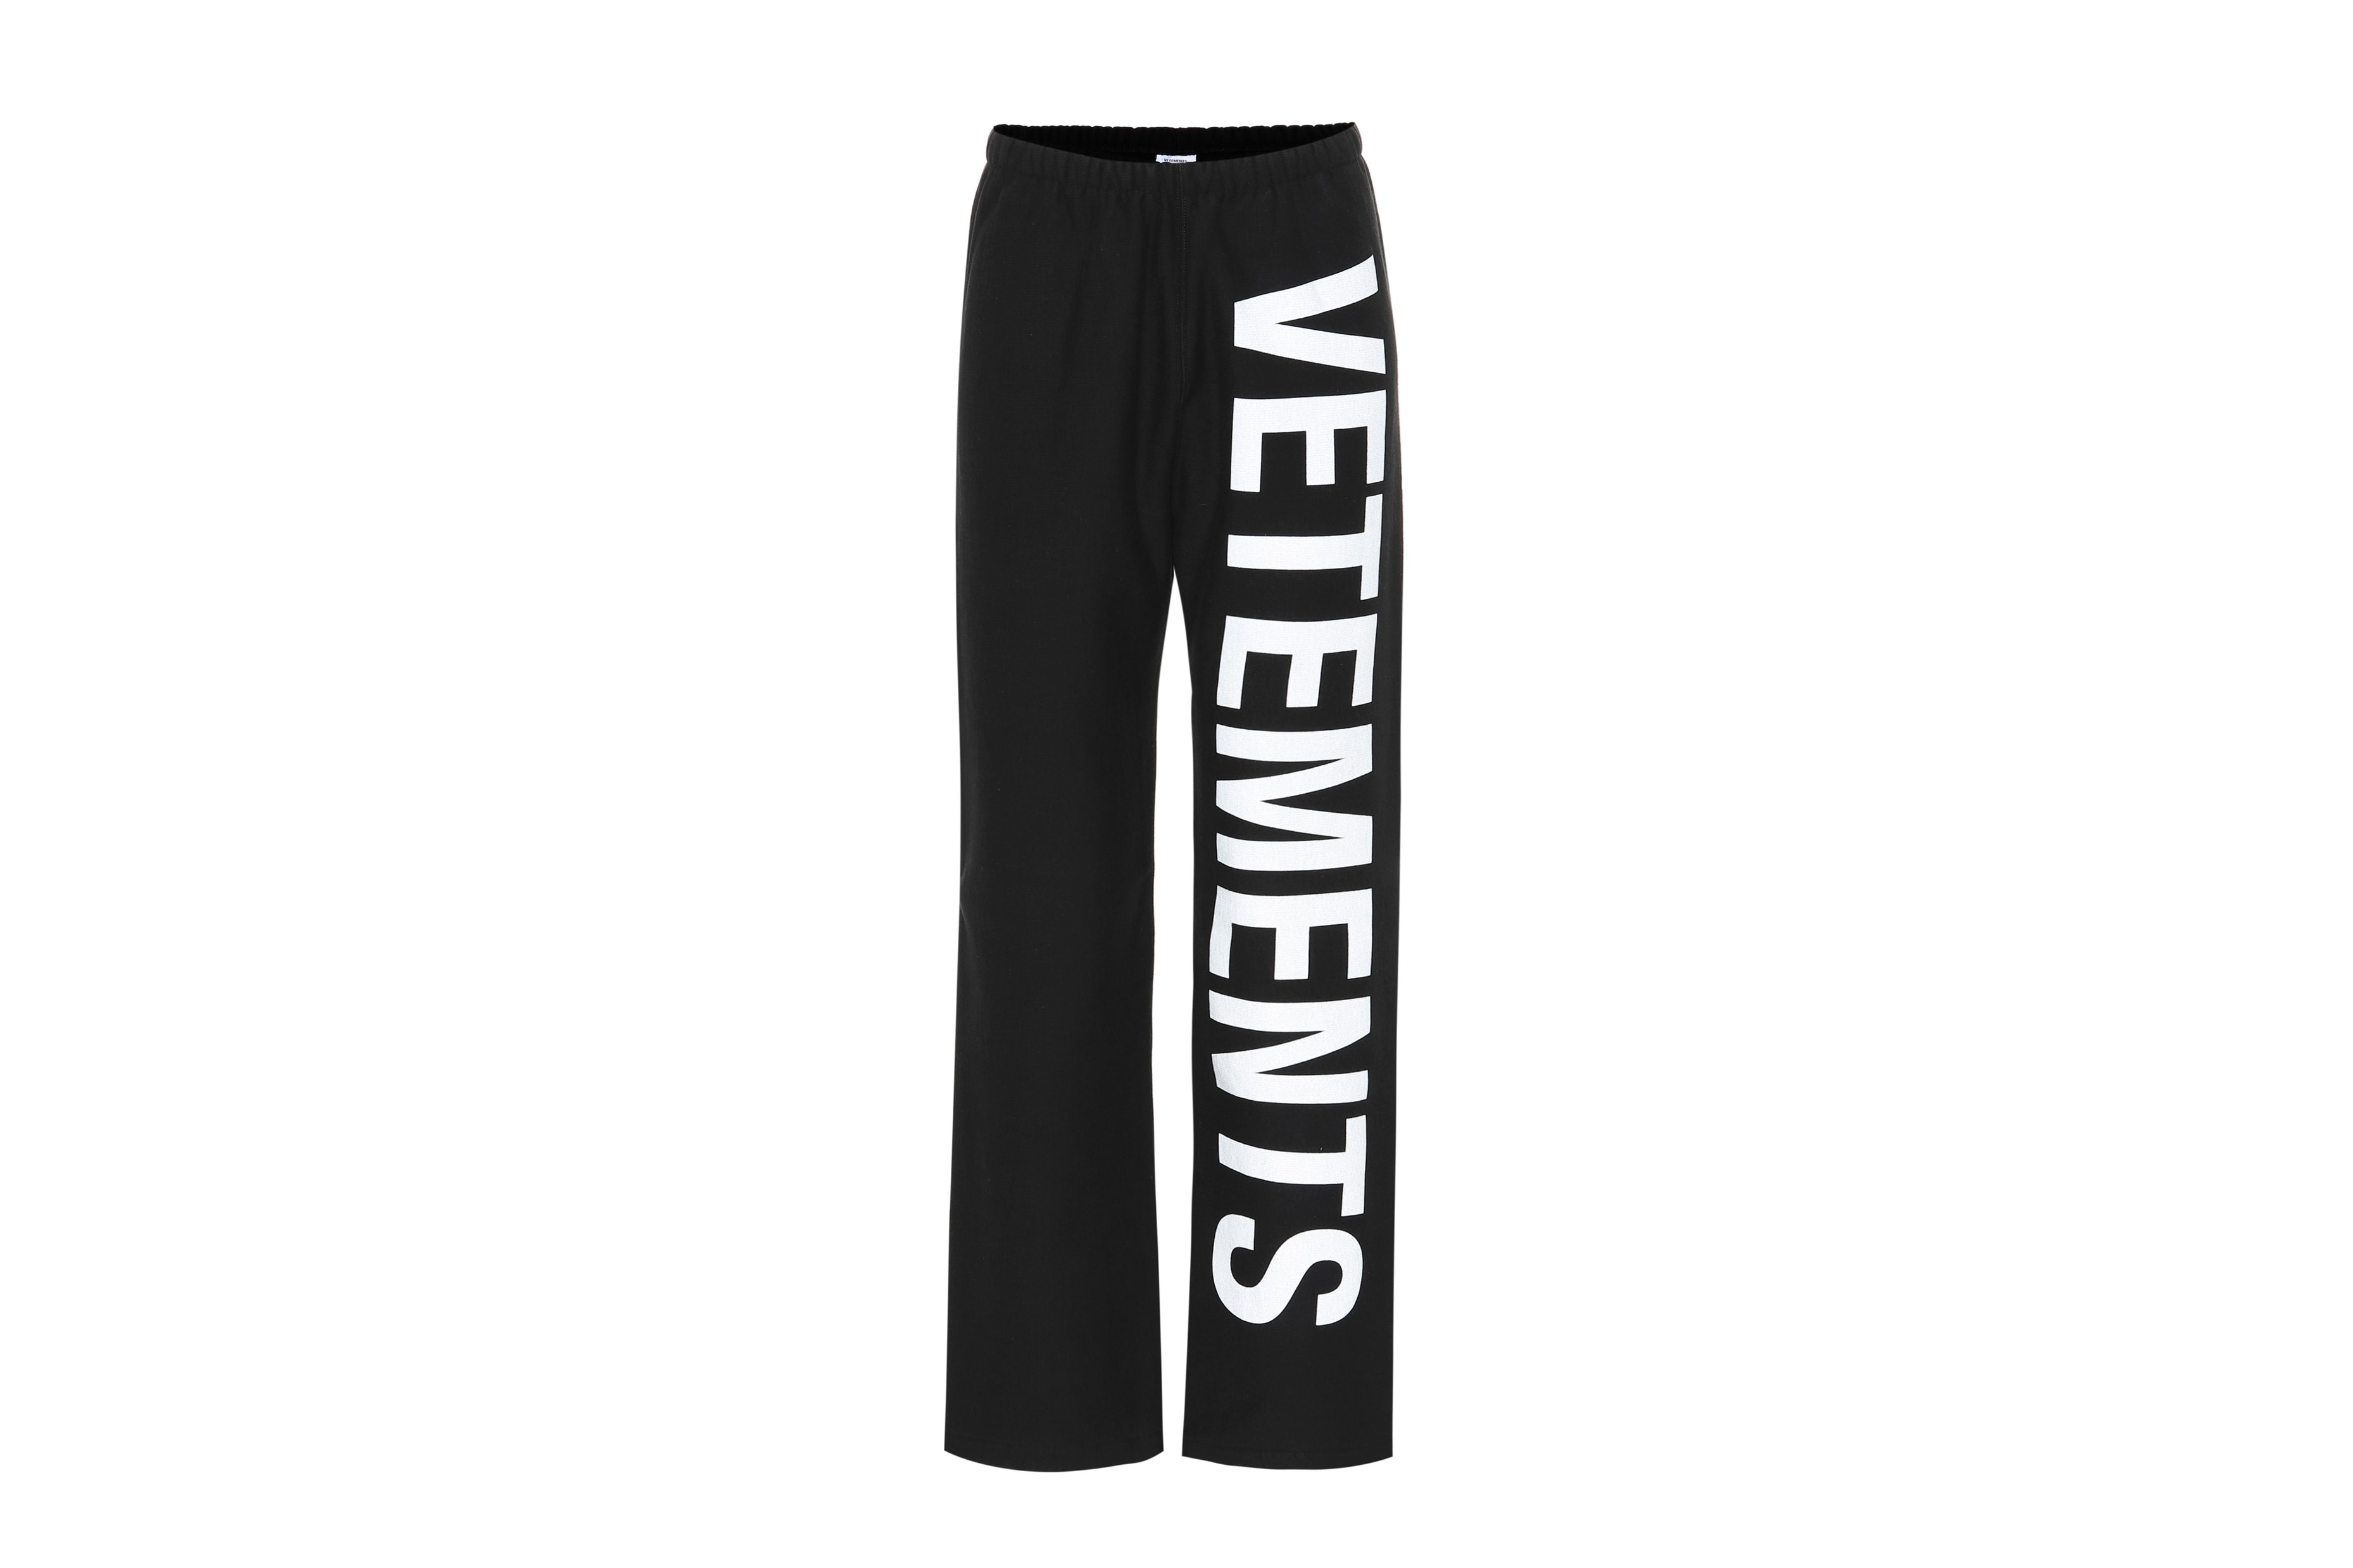 Vetements Black Logo Sweatpants Cotton Jersey Oversize Pants Streetwear Demna Gvasalia